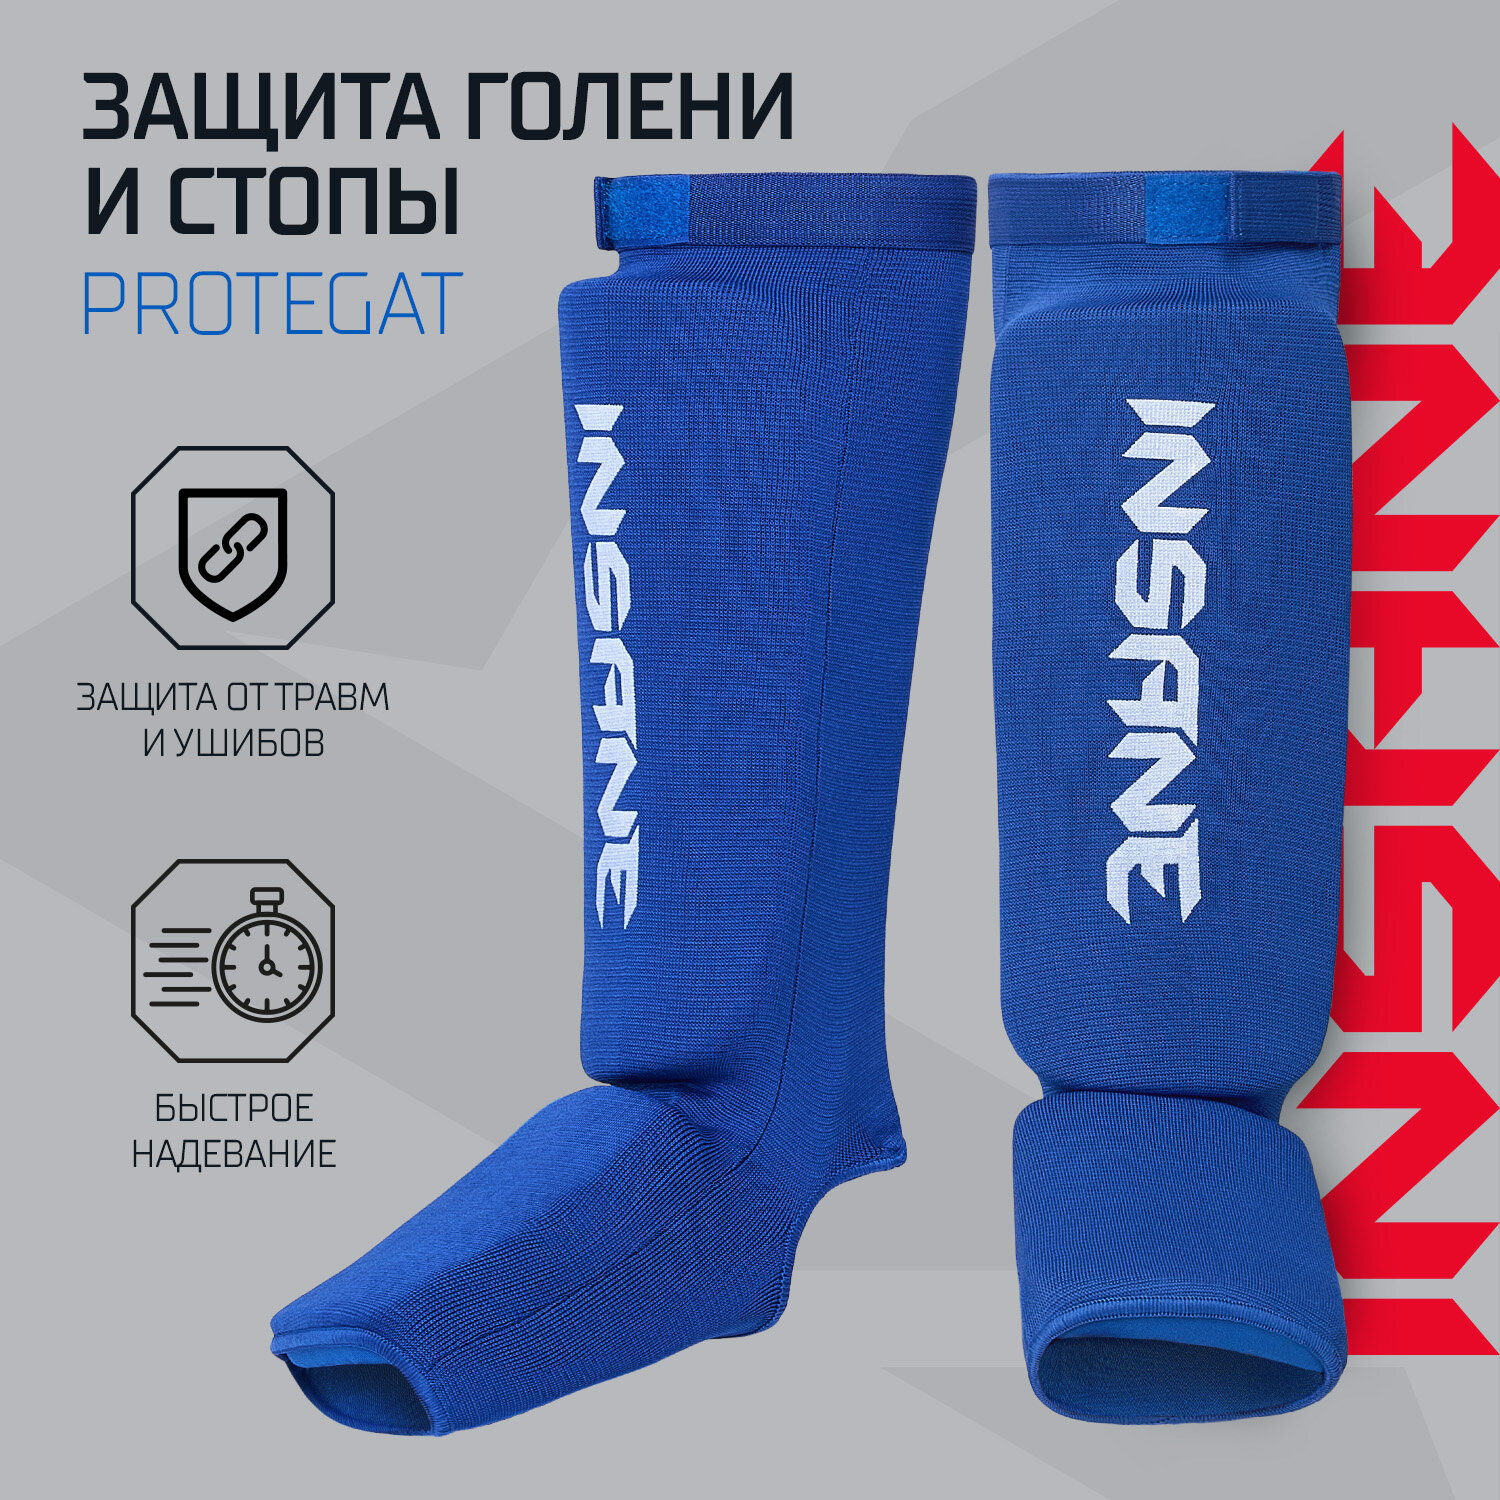 Защита голень-стопа INSANE PROTEGAT IN22-SG200, синий, размер M